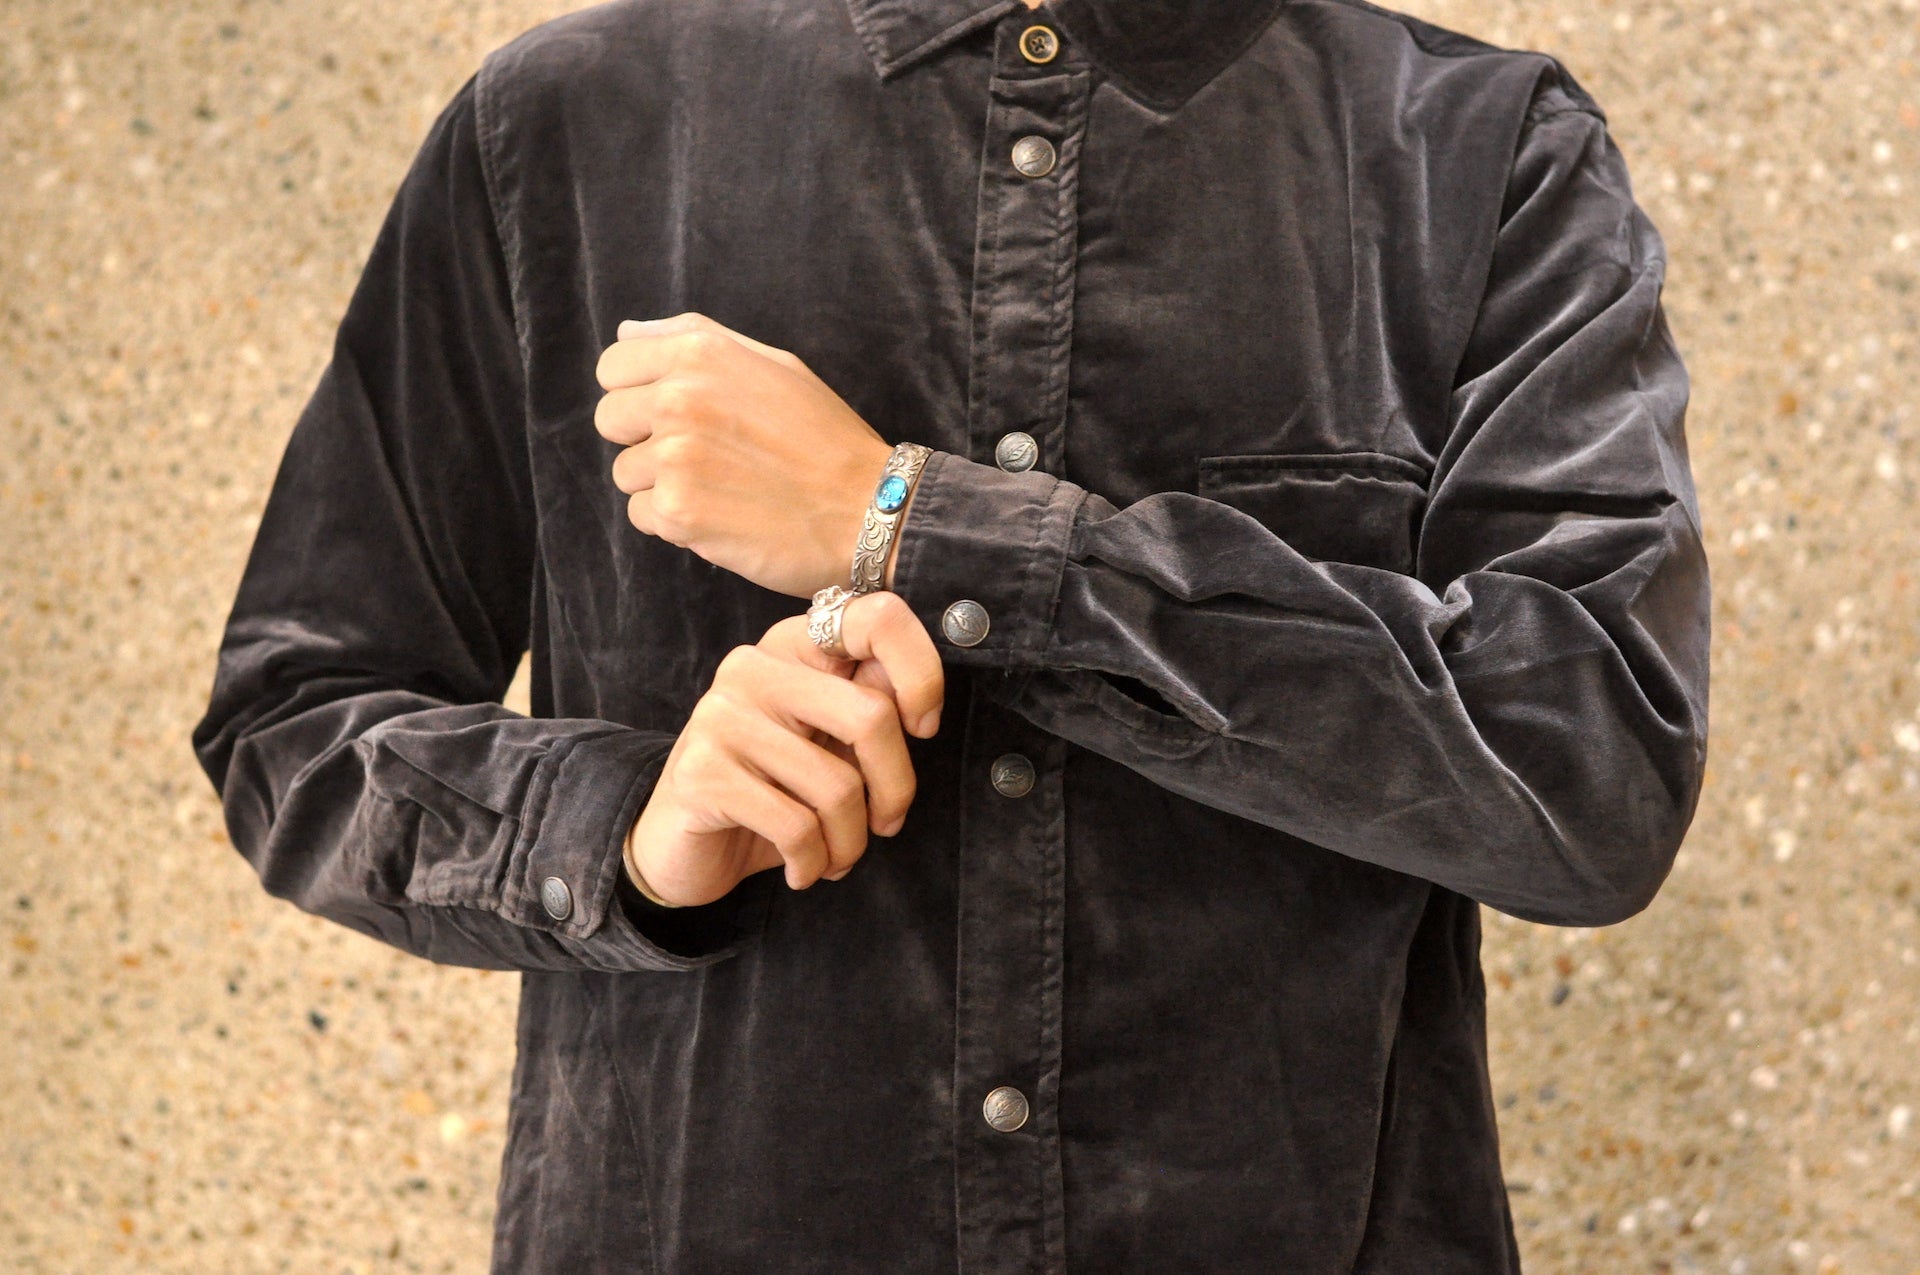 Pure Blue Japan Cotton Velvet C.P.O Jacketed Shirt (Black)